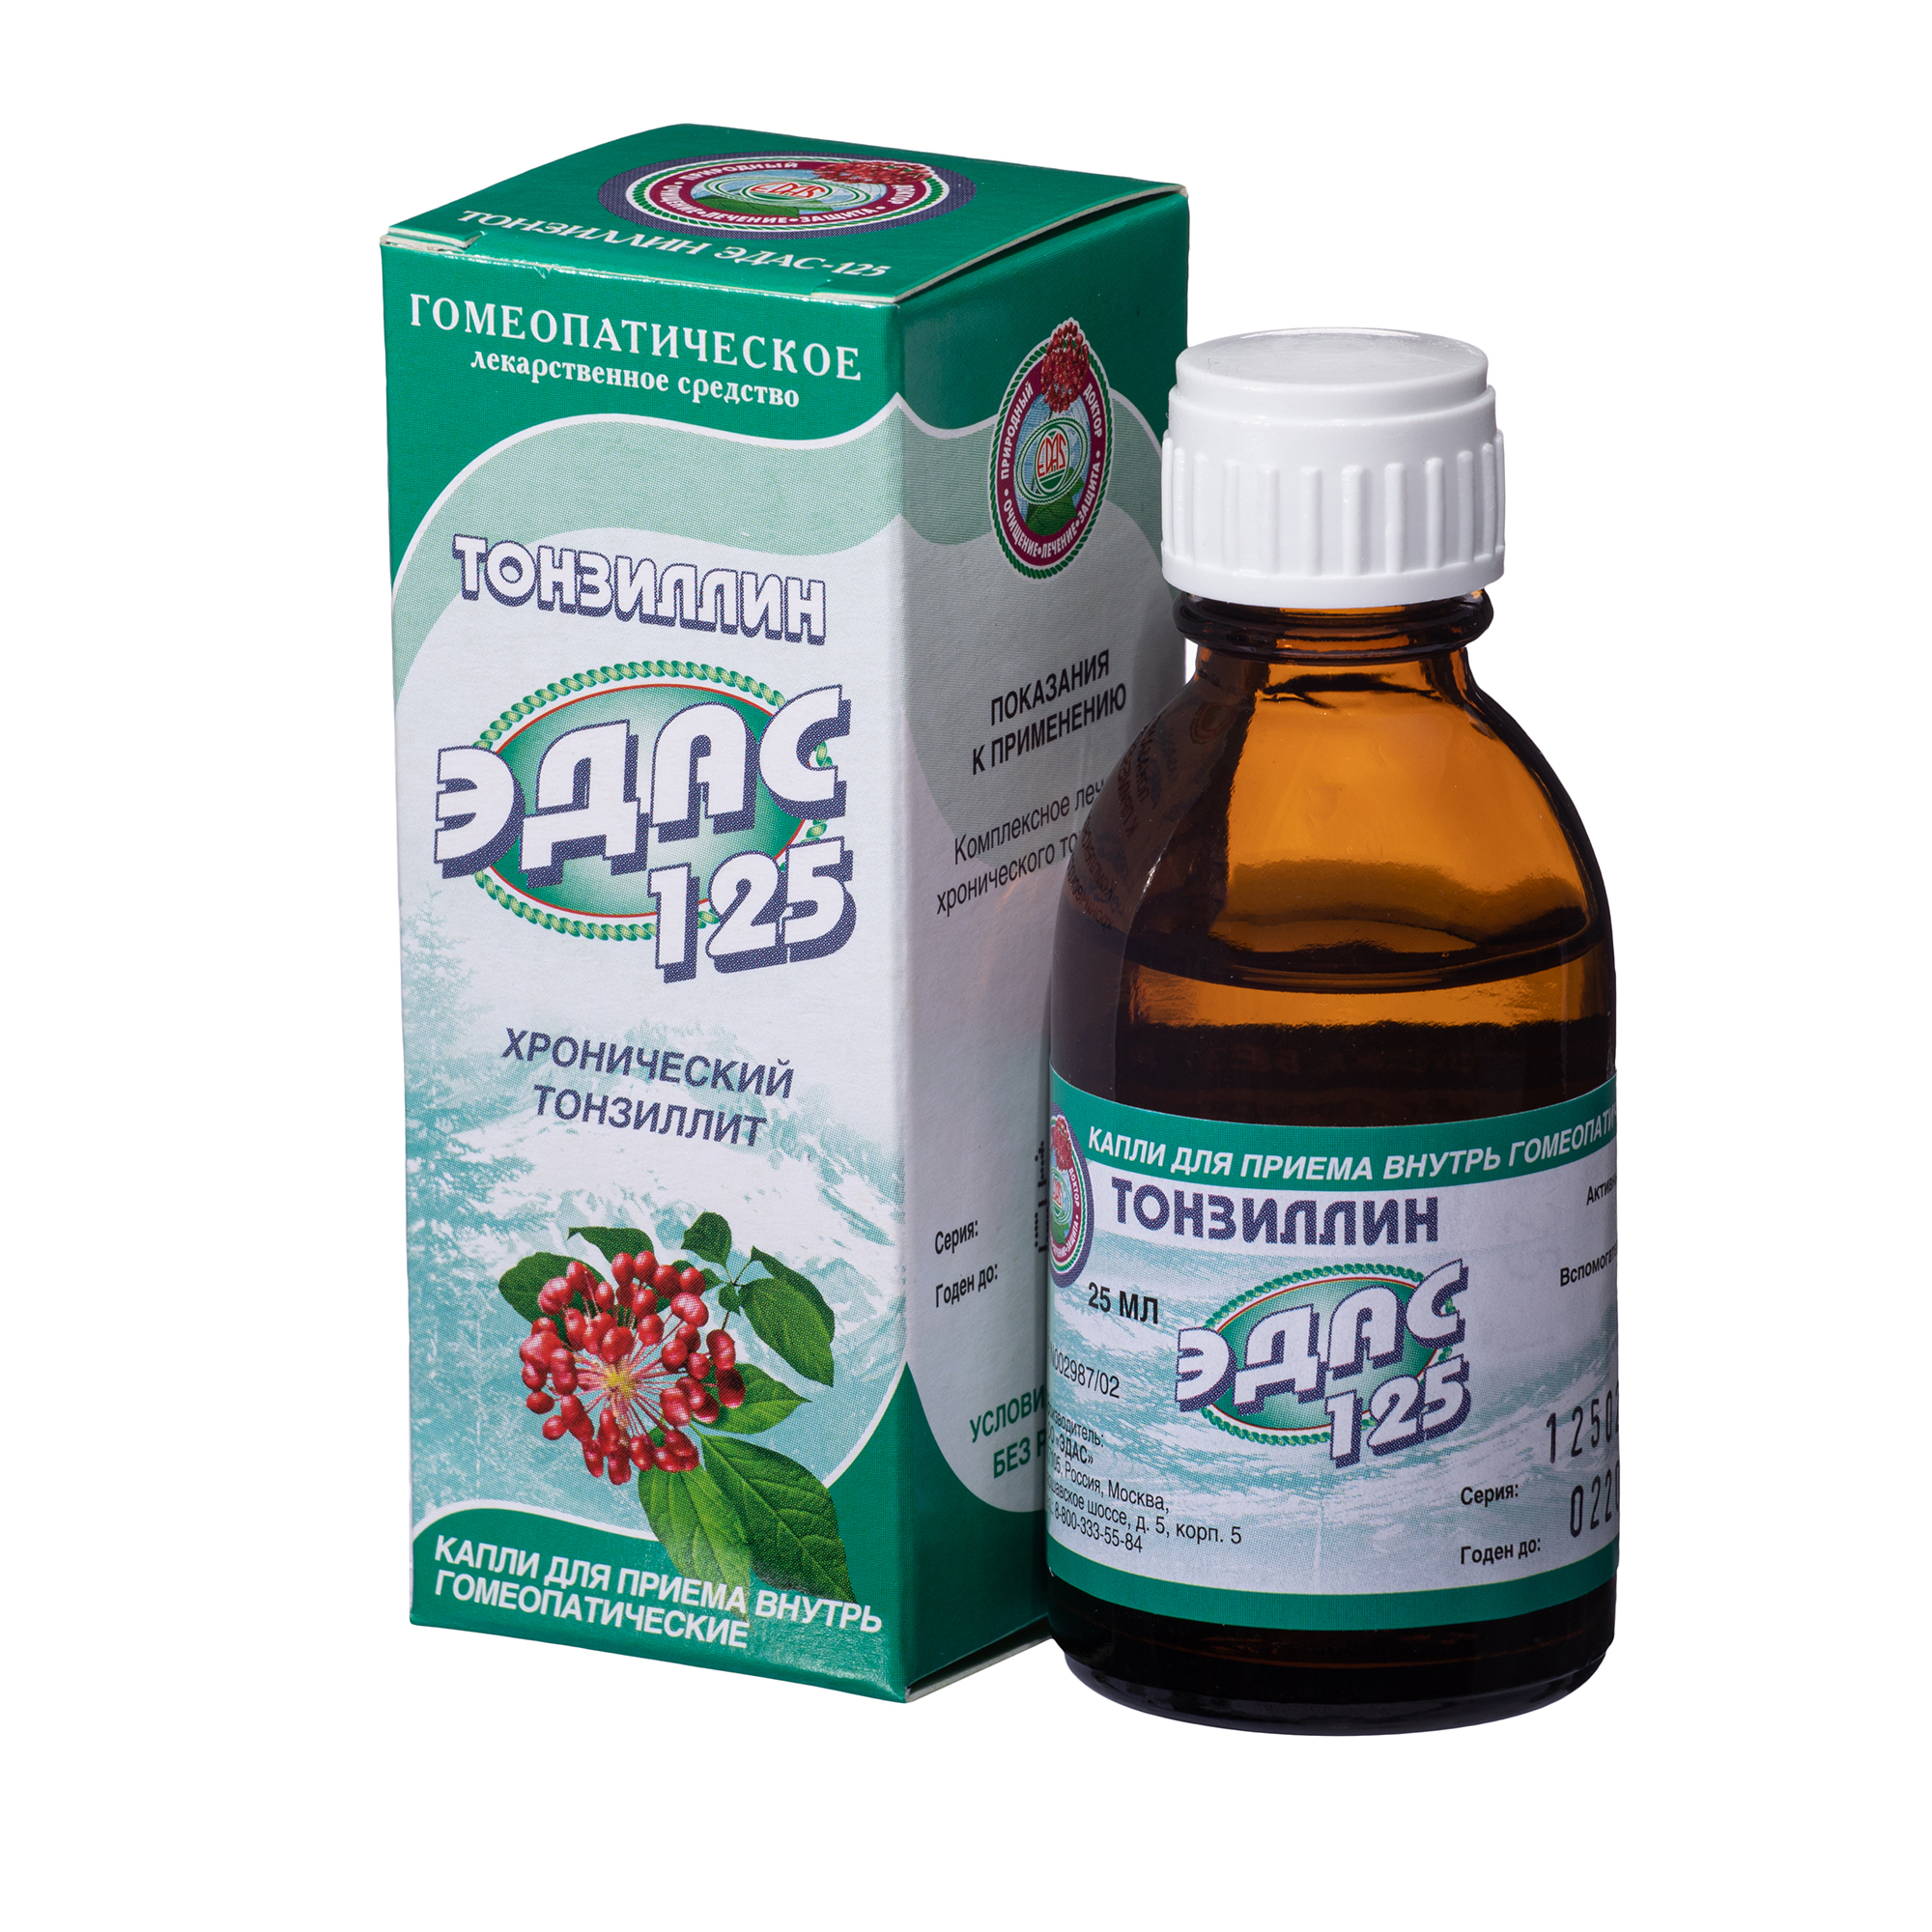 Тонзиллин Эдас-125, для лечения хронического тонзиллита, капли гом. 25 мл москва петербург каталог